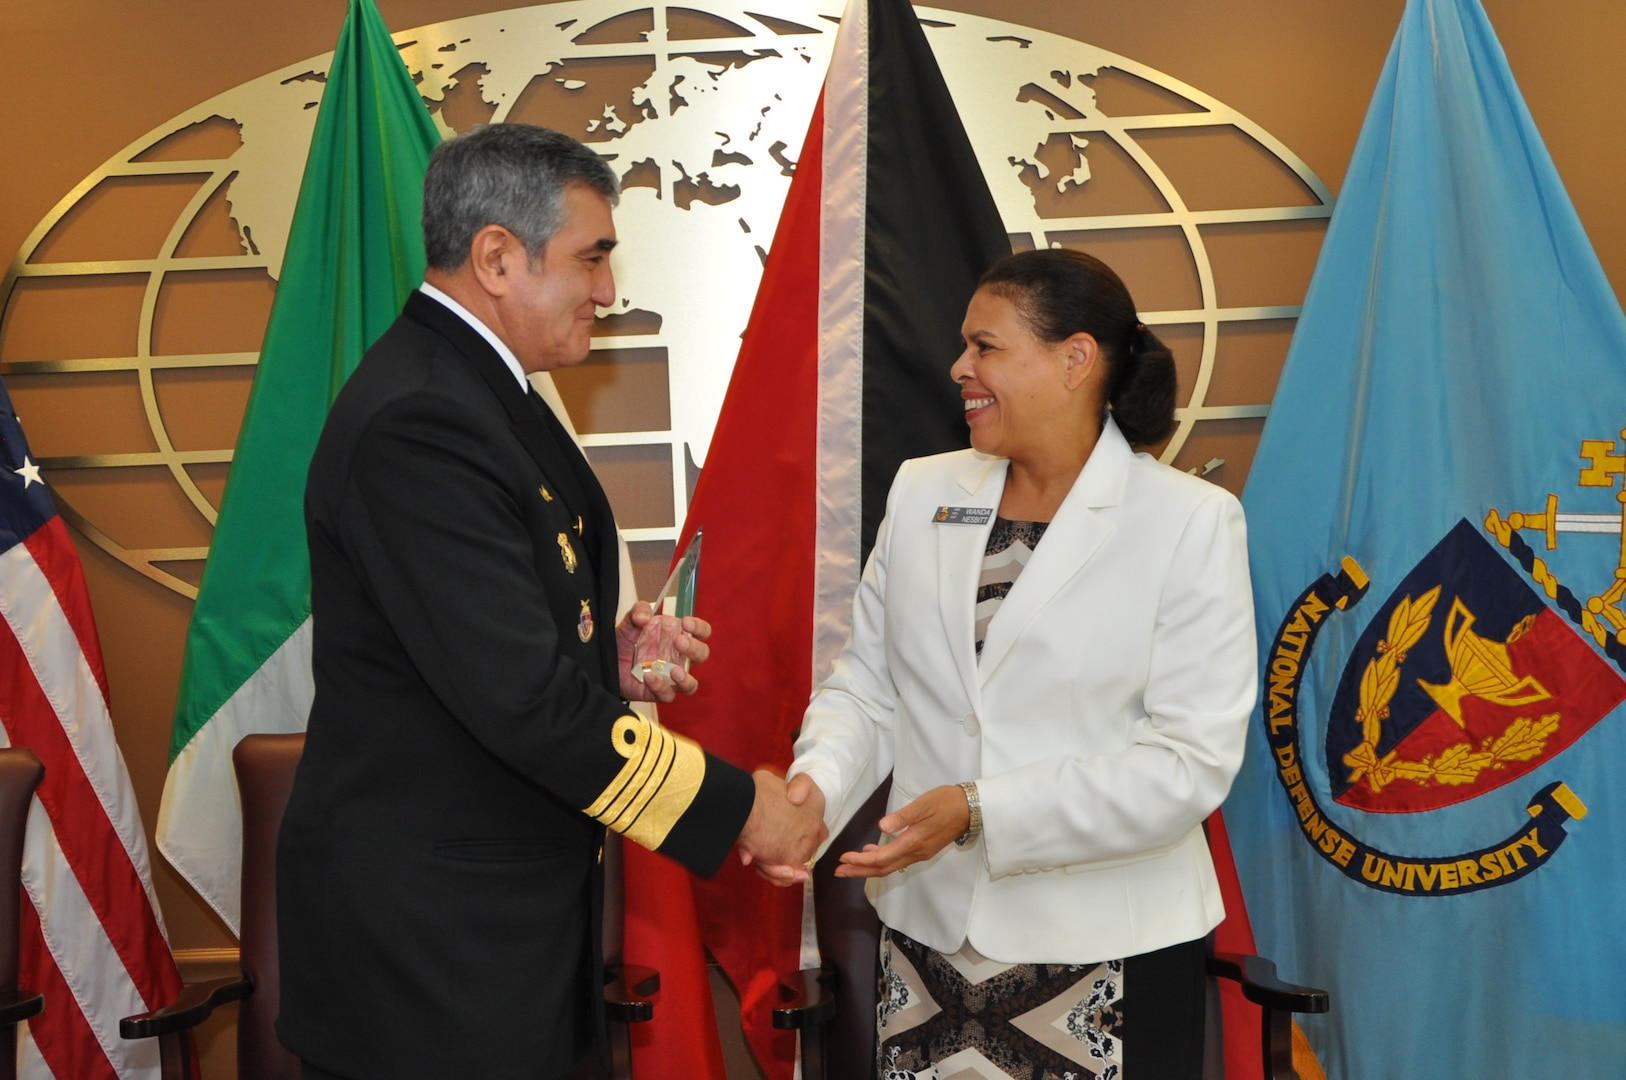 NDU Interim President Ambassador Wanda L. Nesbitt congratulates Admiral José Santiago Valdés Álvarez of Mexico on his induction into the International Fellows Hall of Fame on September 3, 2014.